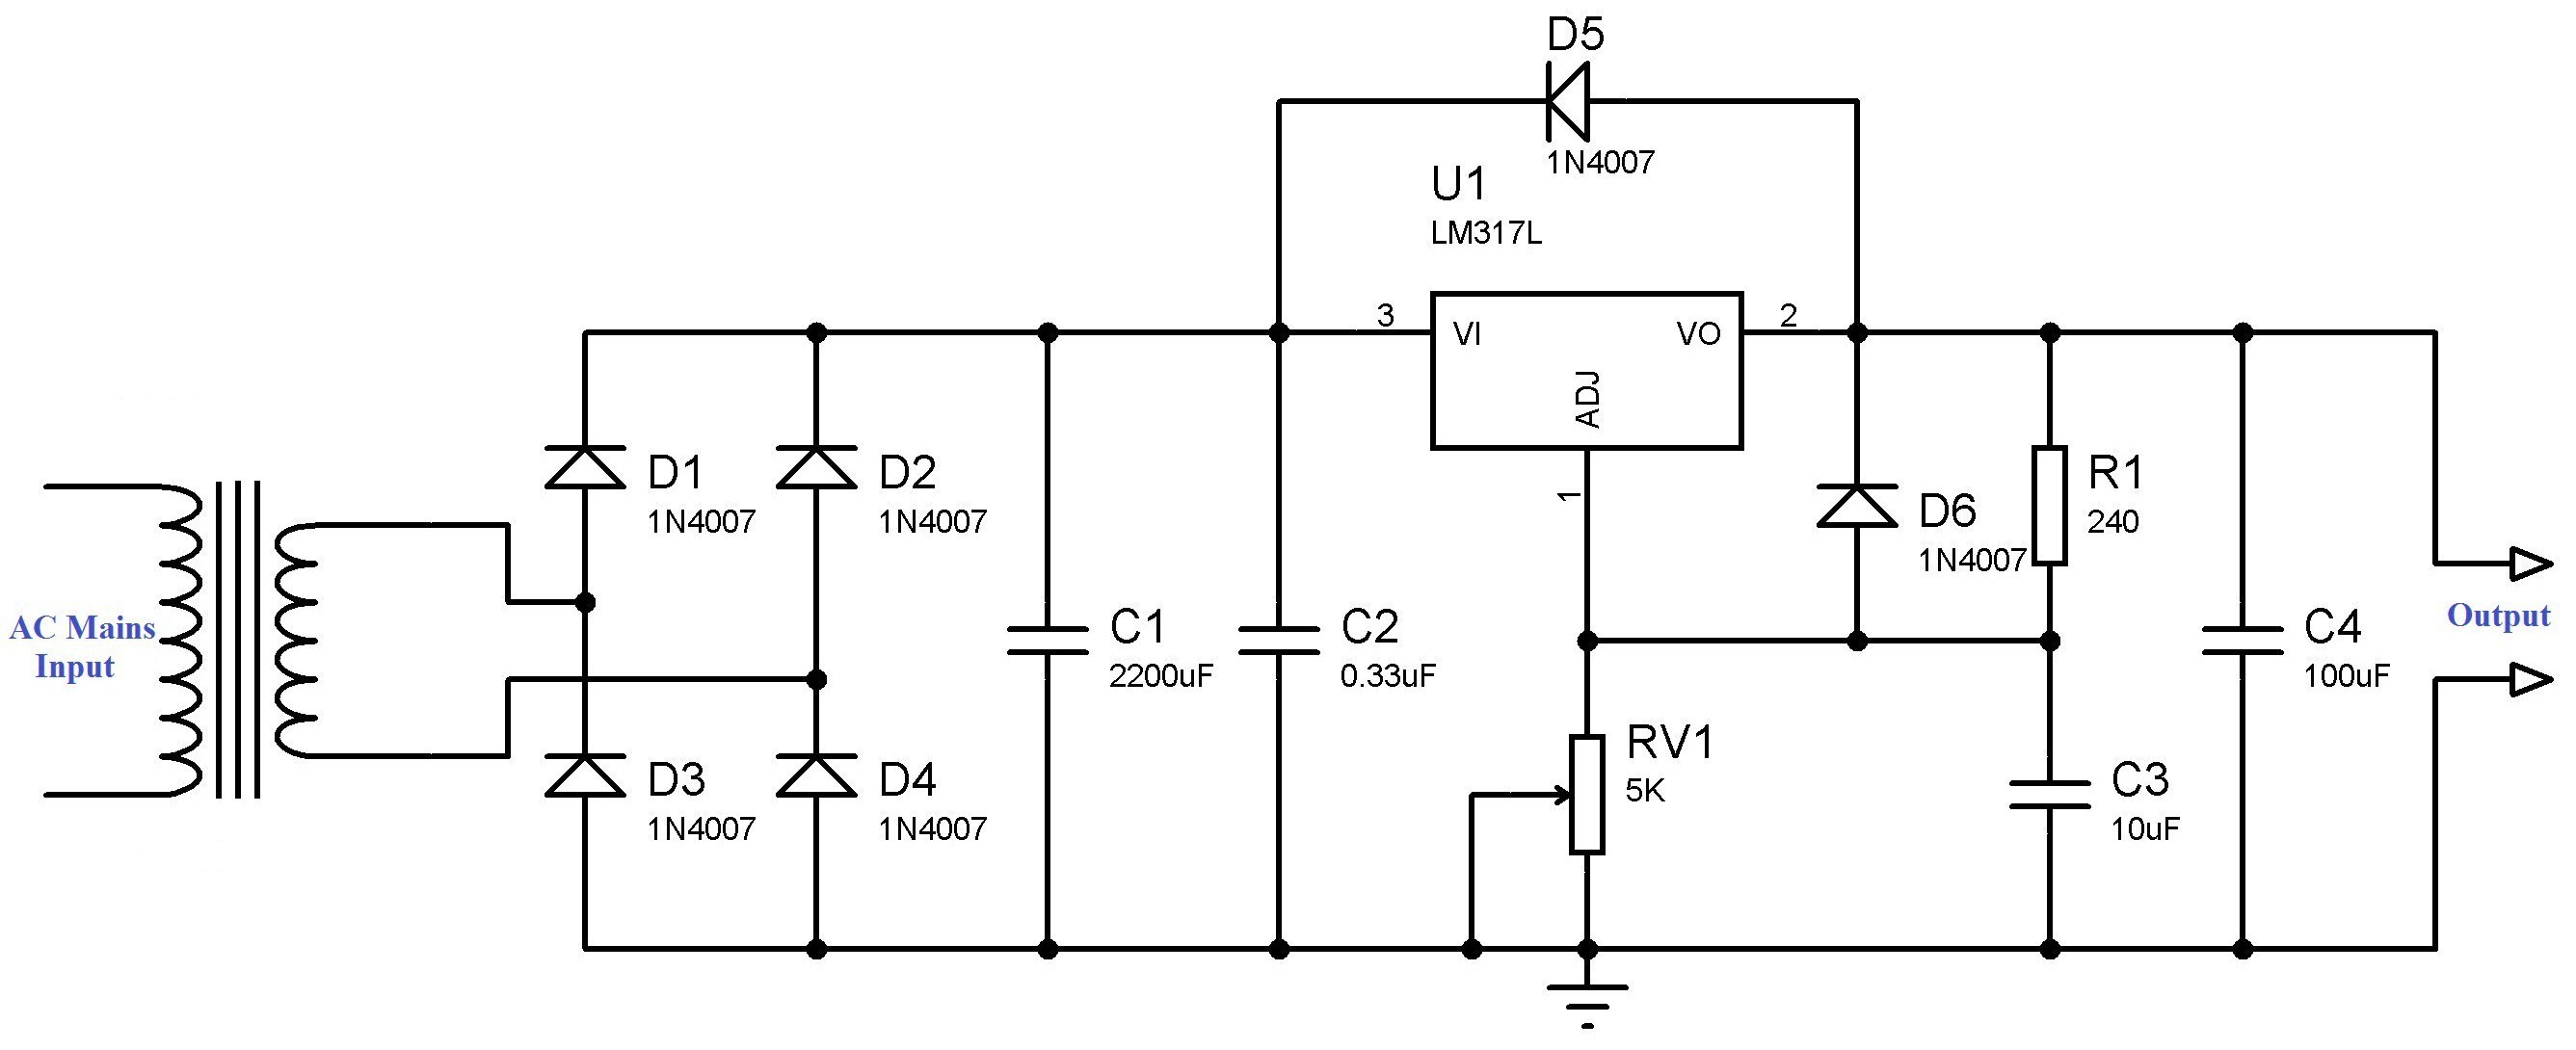 12 Volt Relay Wiring Diagram Fresh Variable Power Supply Using Lm317 Voltage Regulator Plete